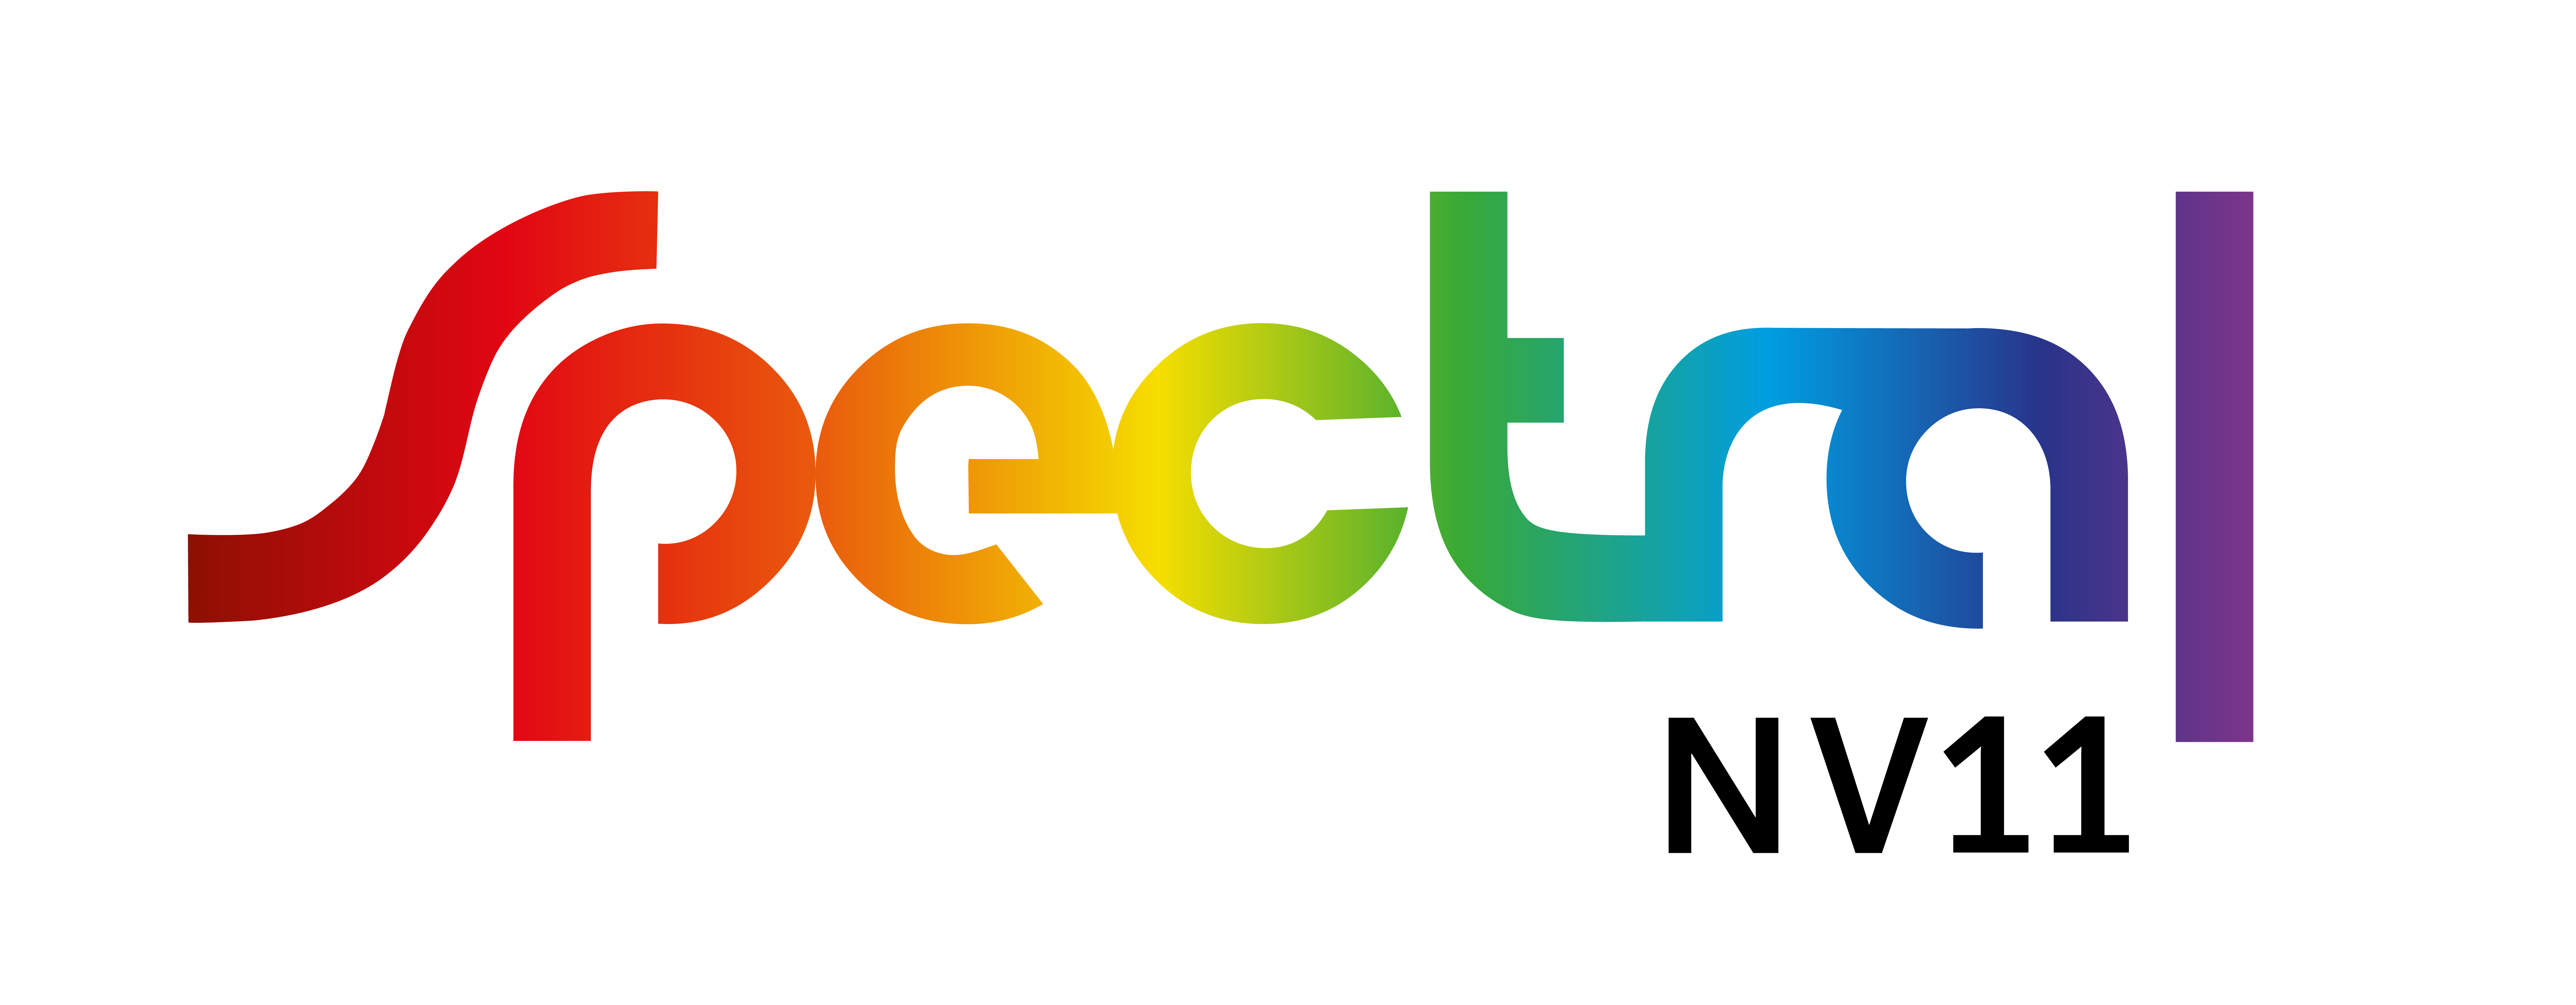 spectral logo